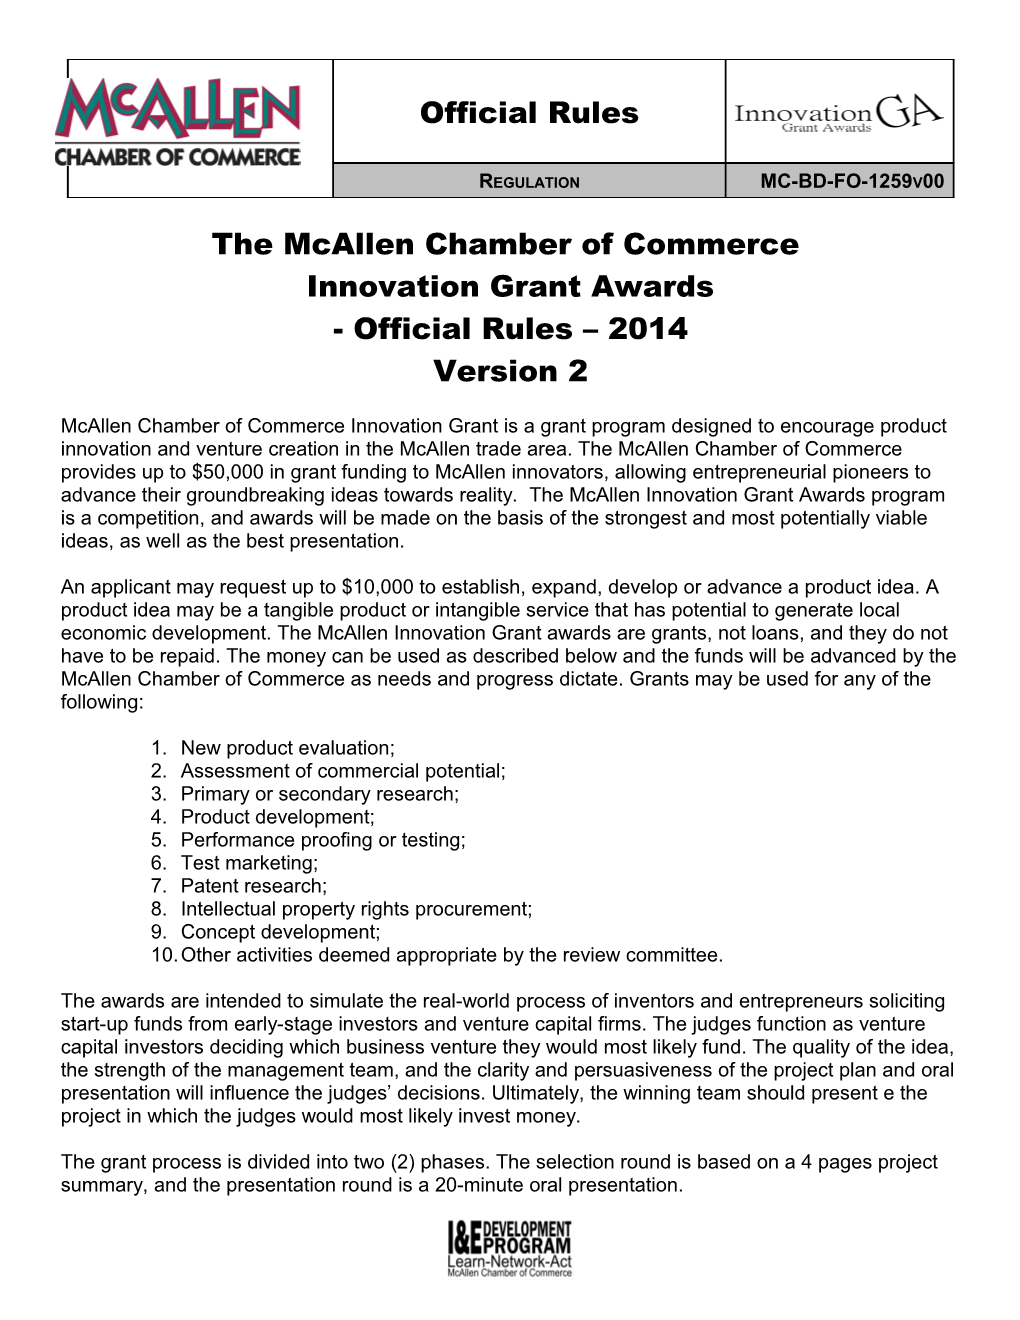 The Mcallen Chamber of Commerce